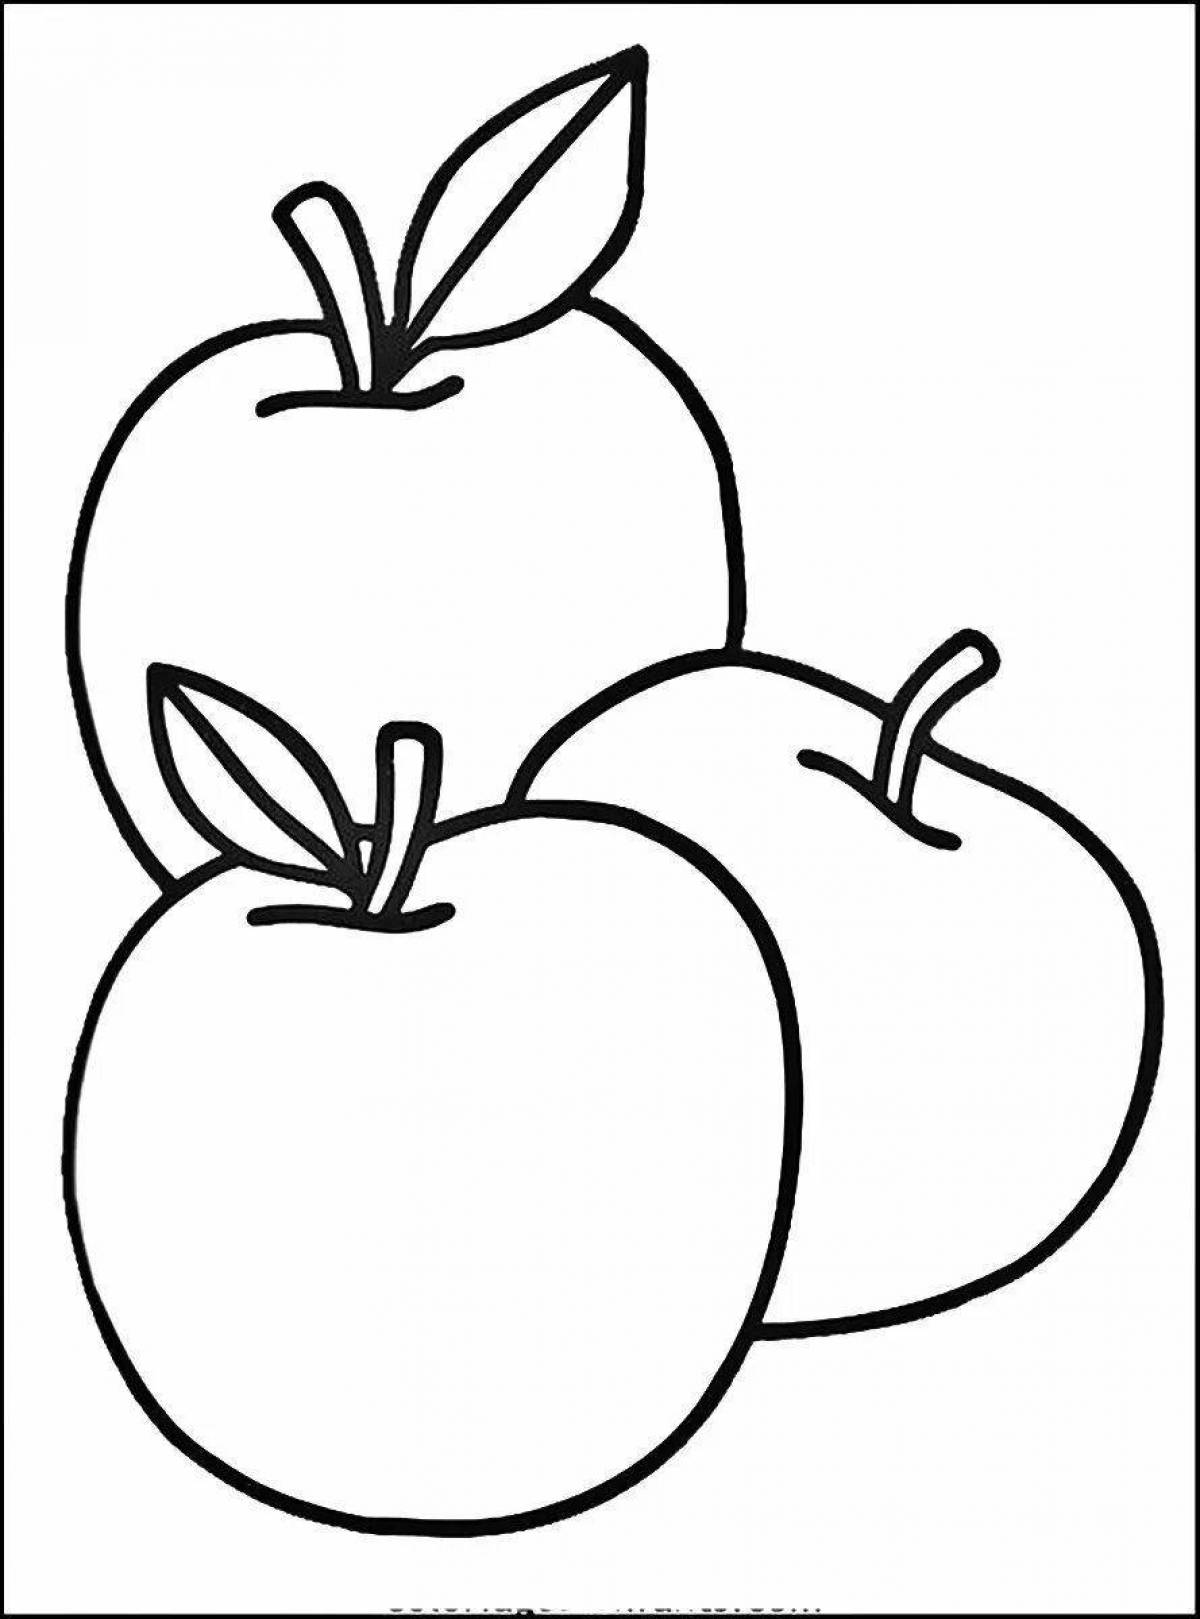 Радостная яблочная раскраска для детей 5-6 лет